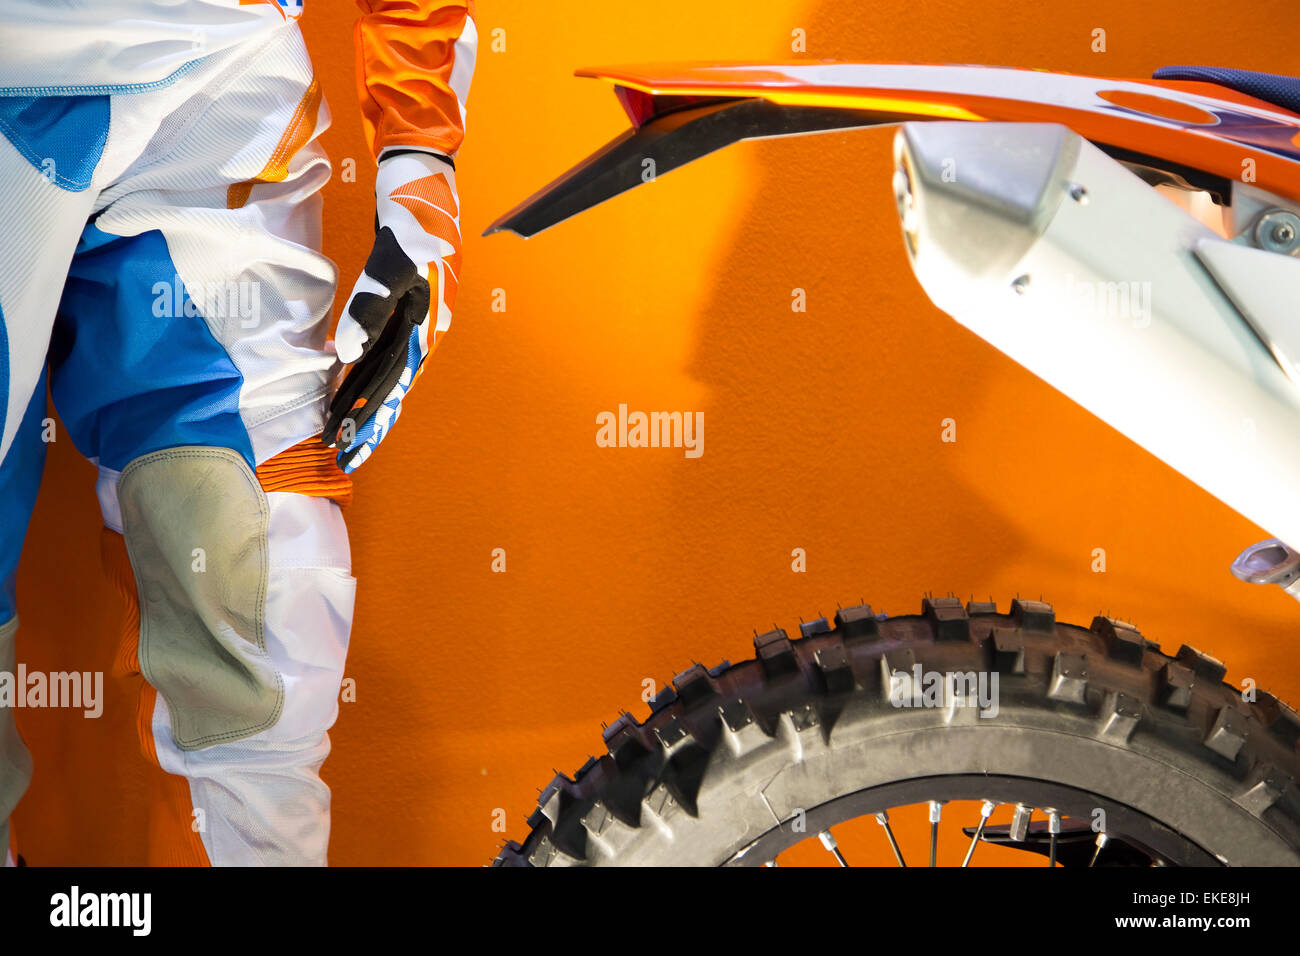 Closeup image of a motocross biker protective clothing and motocross bike on orange background Stock Photo